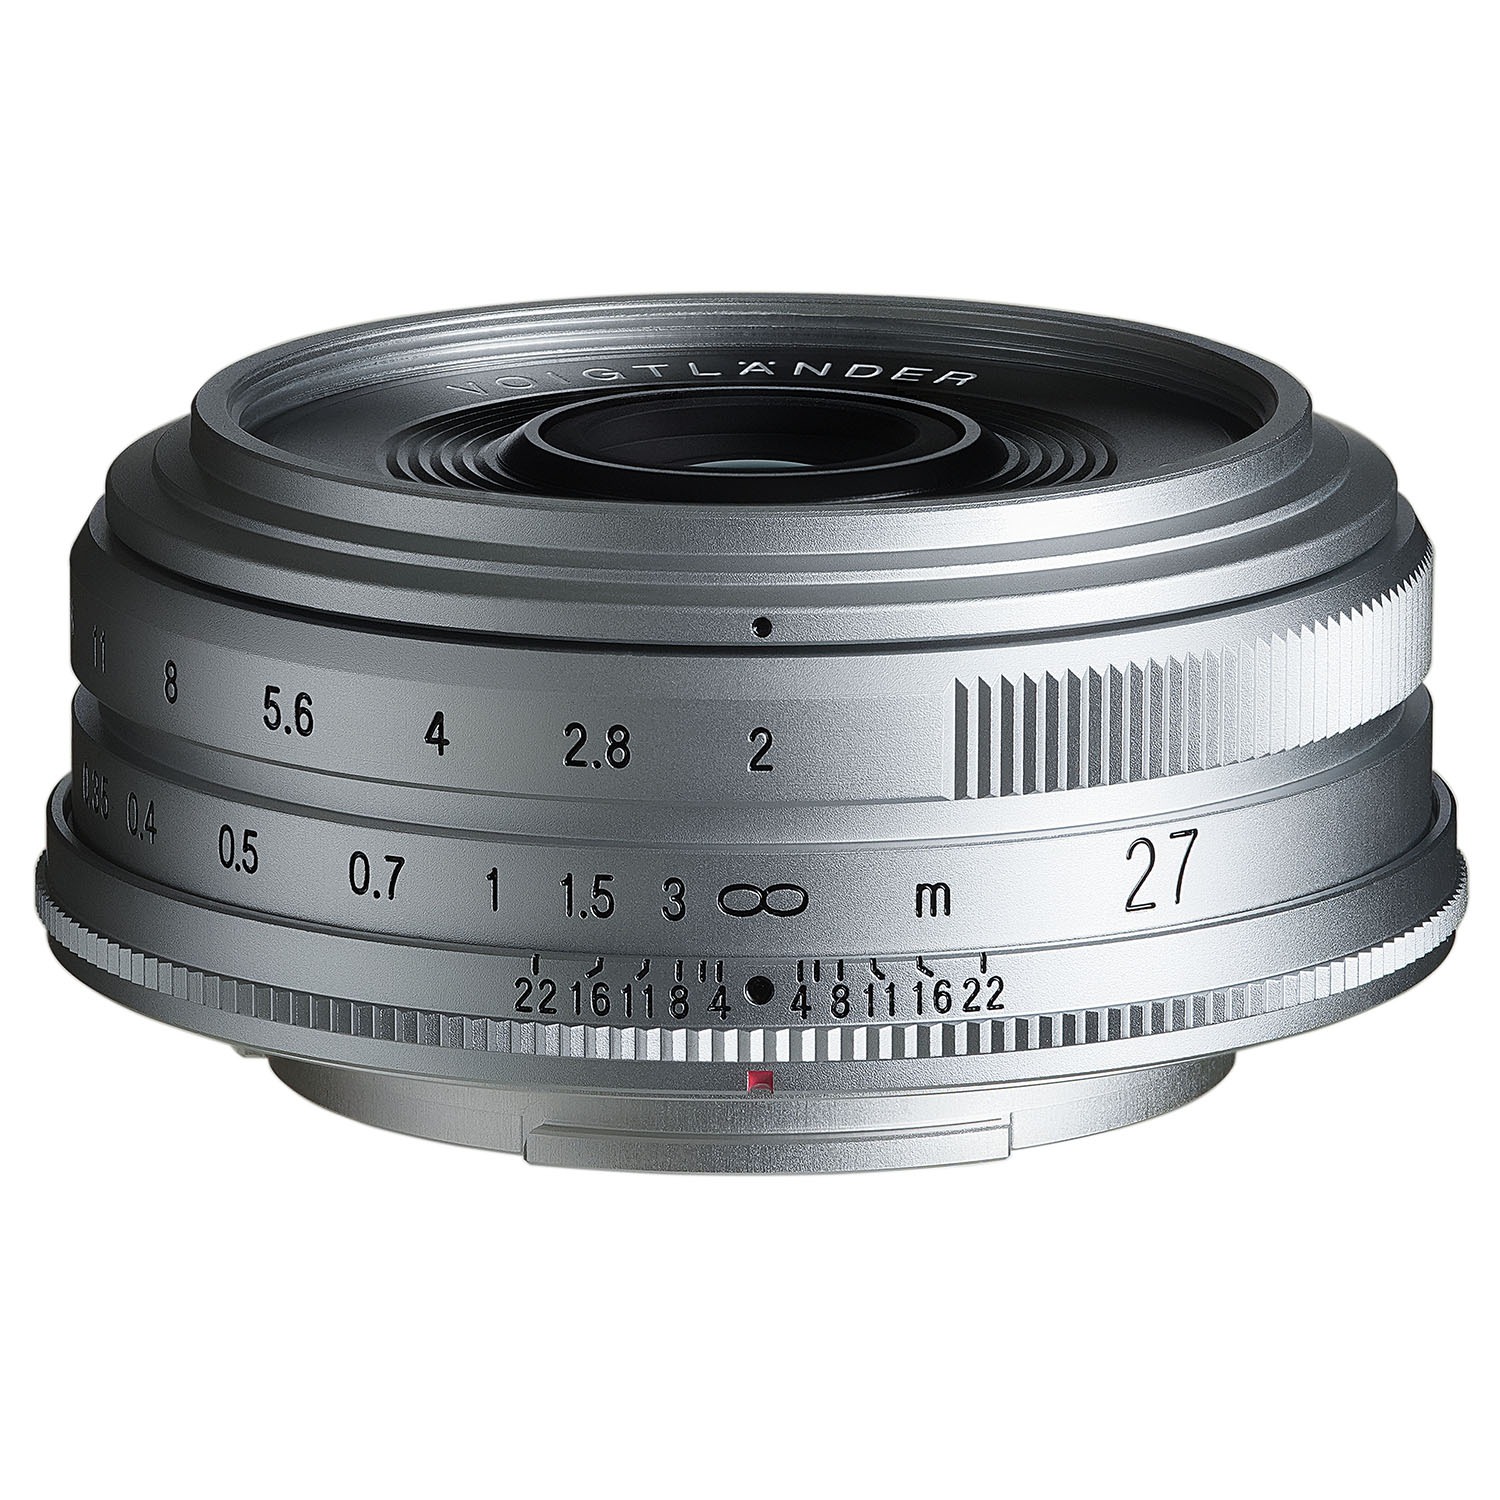 Ống kính Voigtlander Ultron 27mm F2 cho Fuijfilm X (Black)